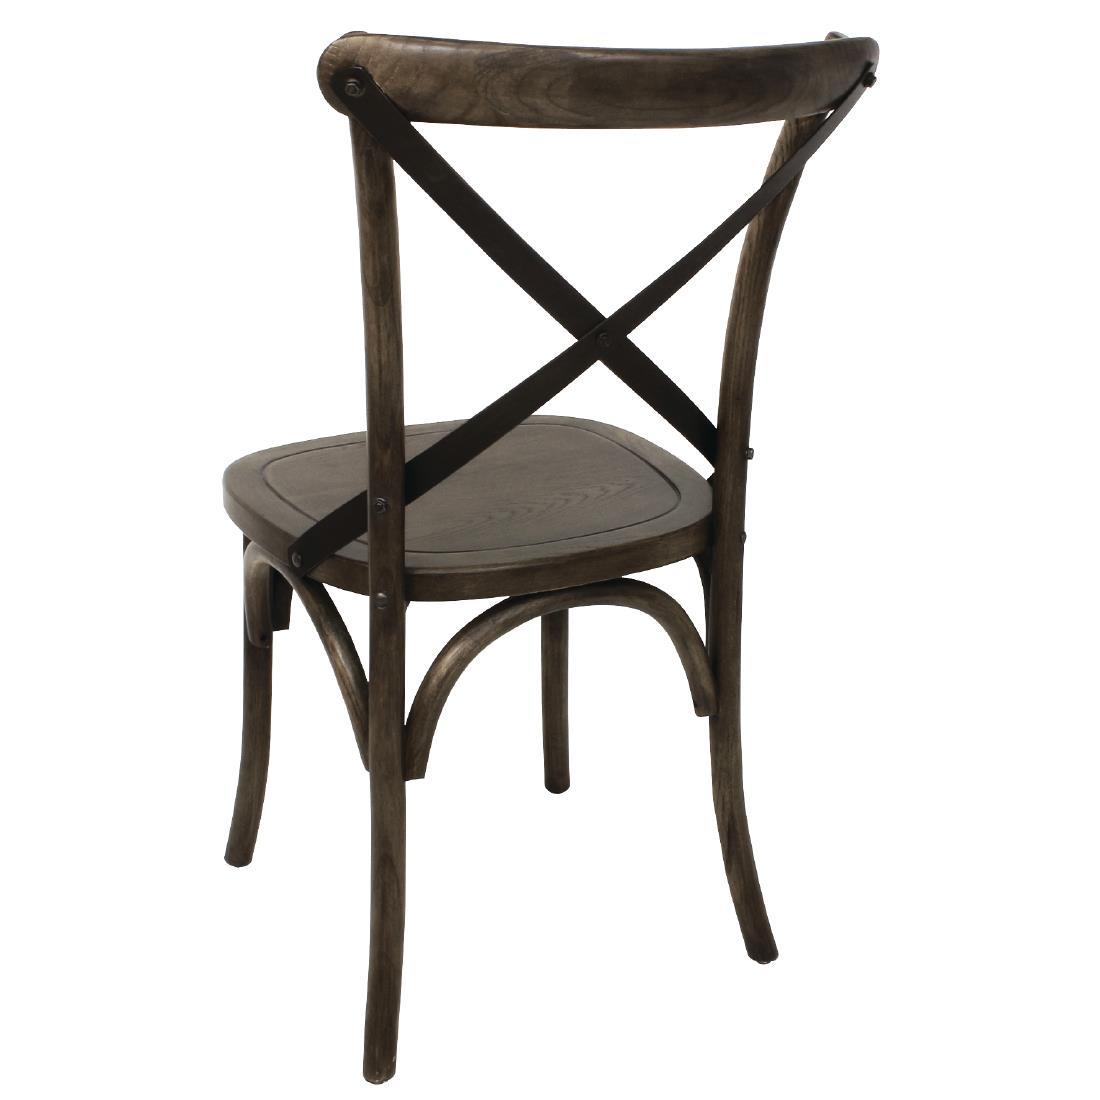 GG658 - Bolero Wooden Dining Chair with Metal Cross Backrest (Walnut Finish) (Pa - GG658  - 2